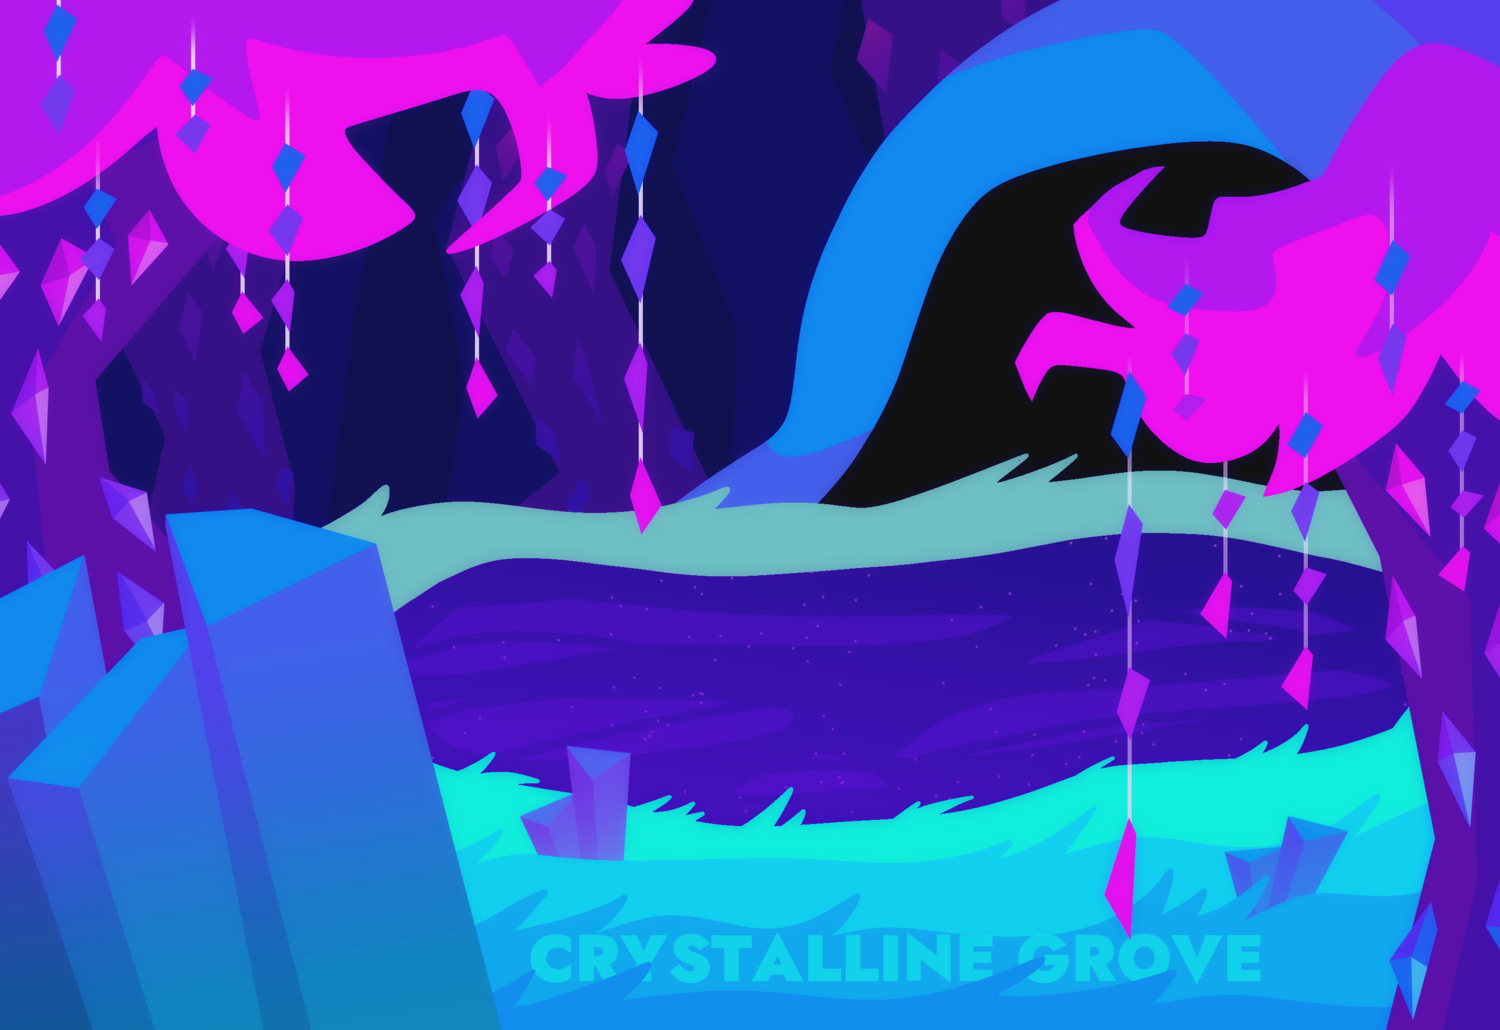 Casper Daglish: Crystalline Grove